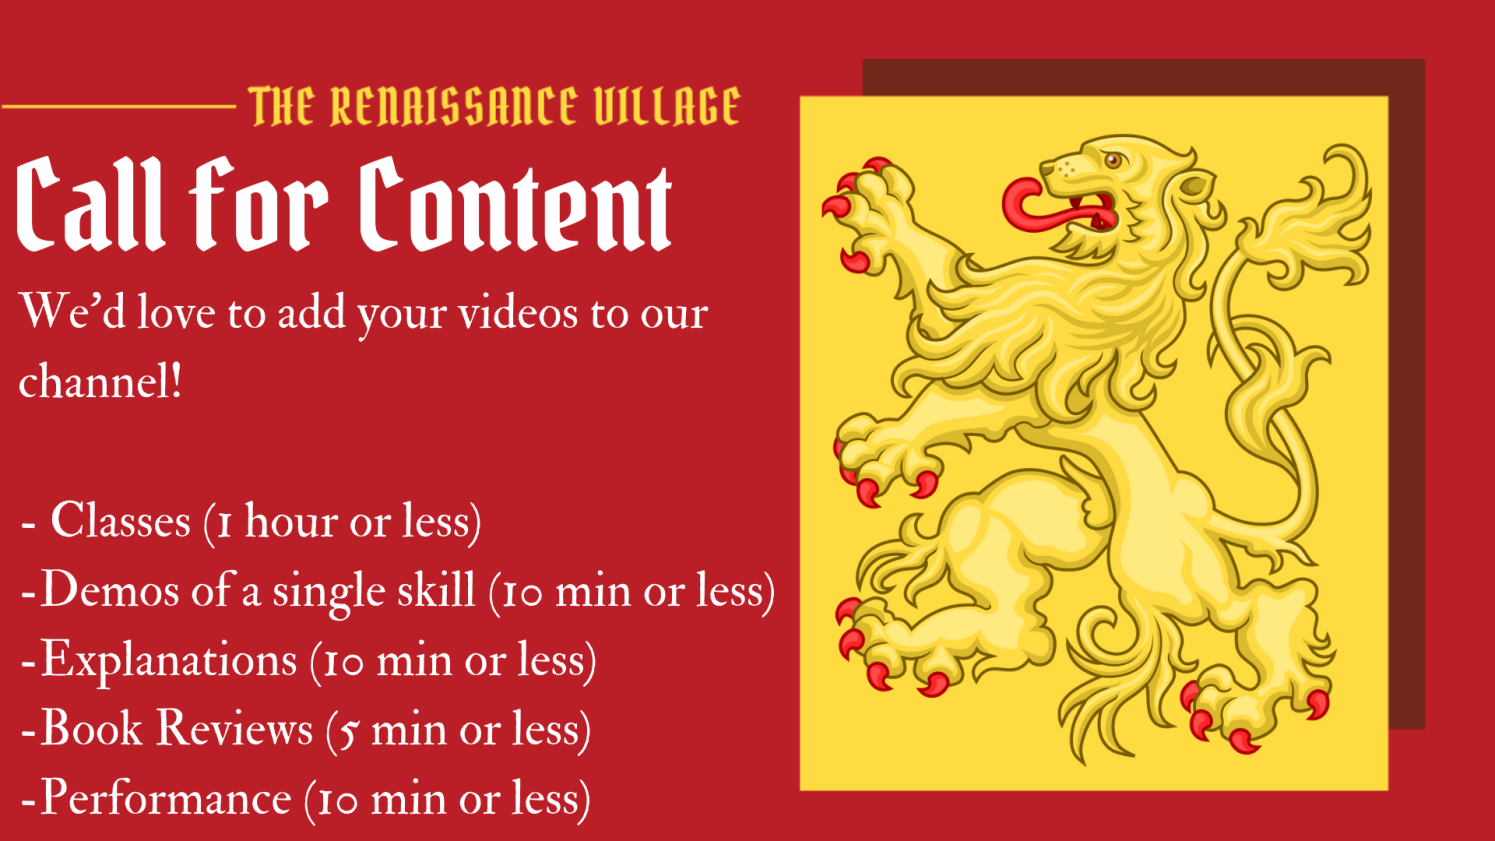 Call for Virtual Renaissance Village Content!